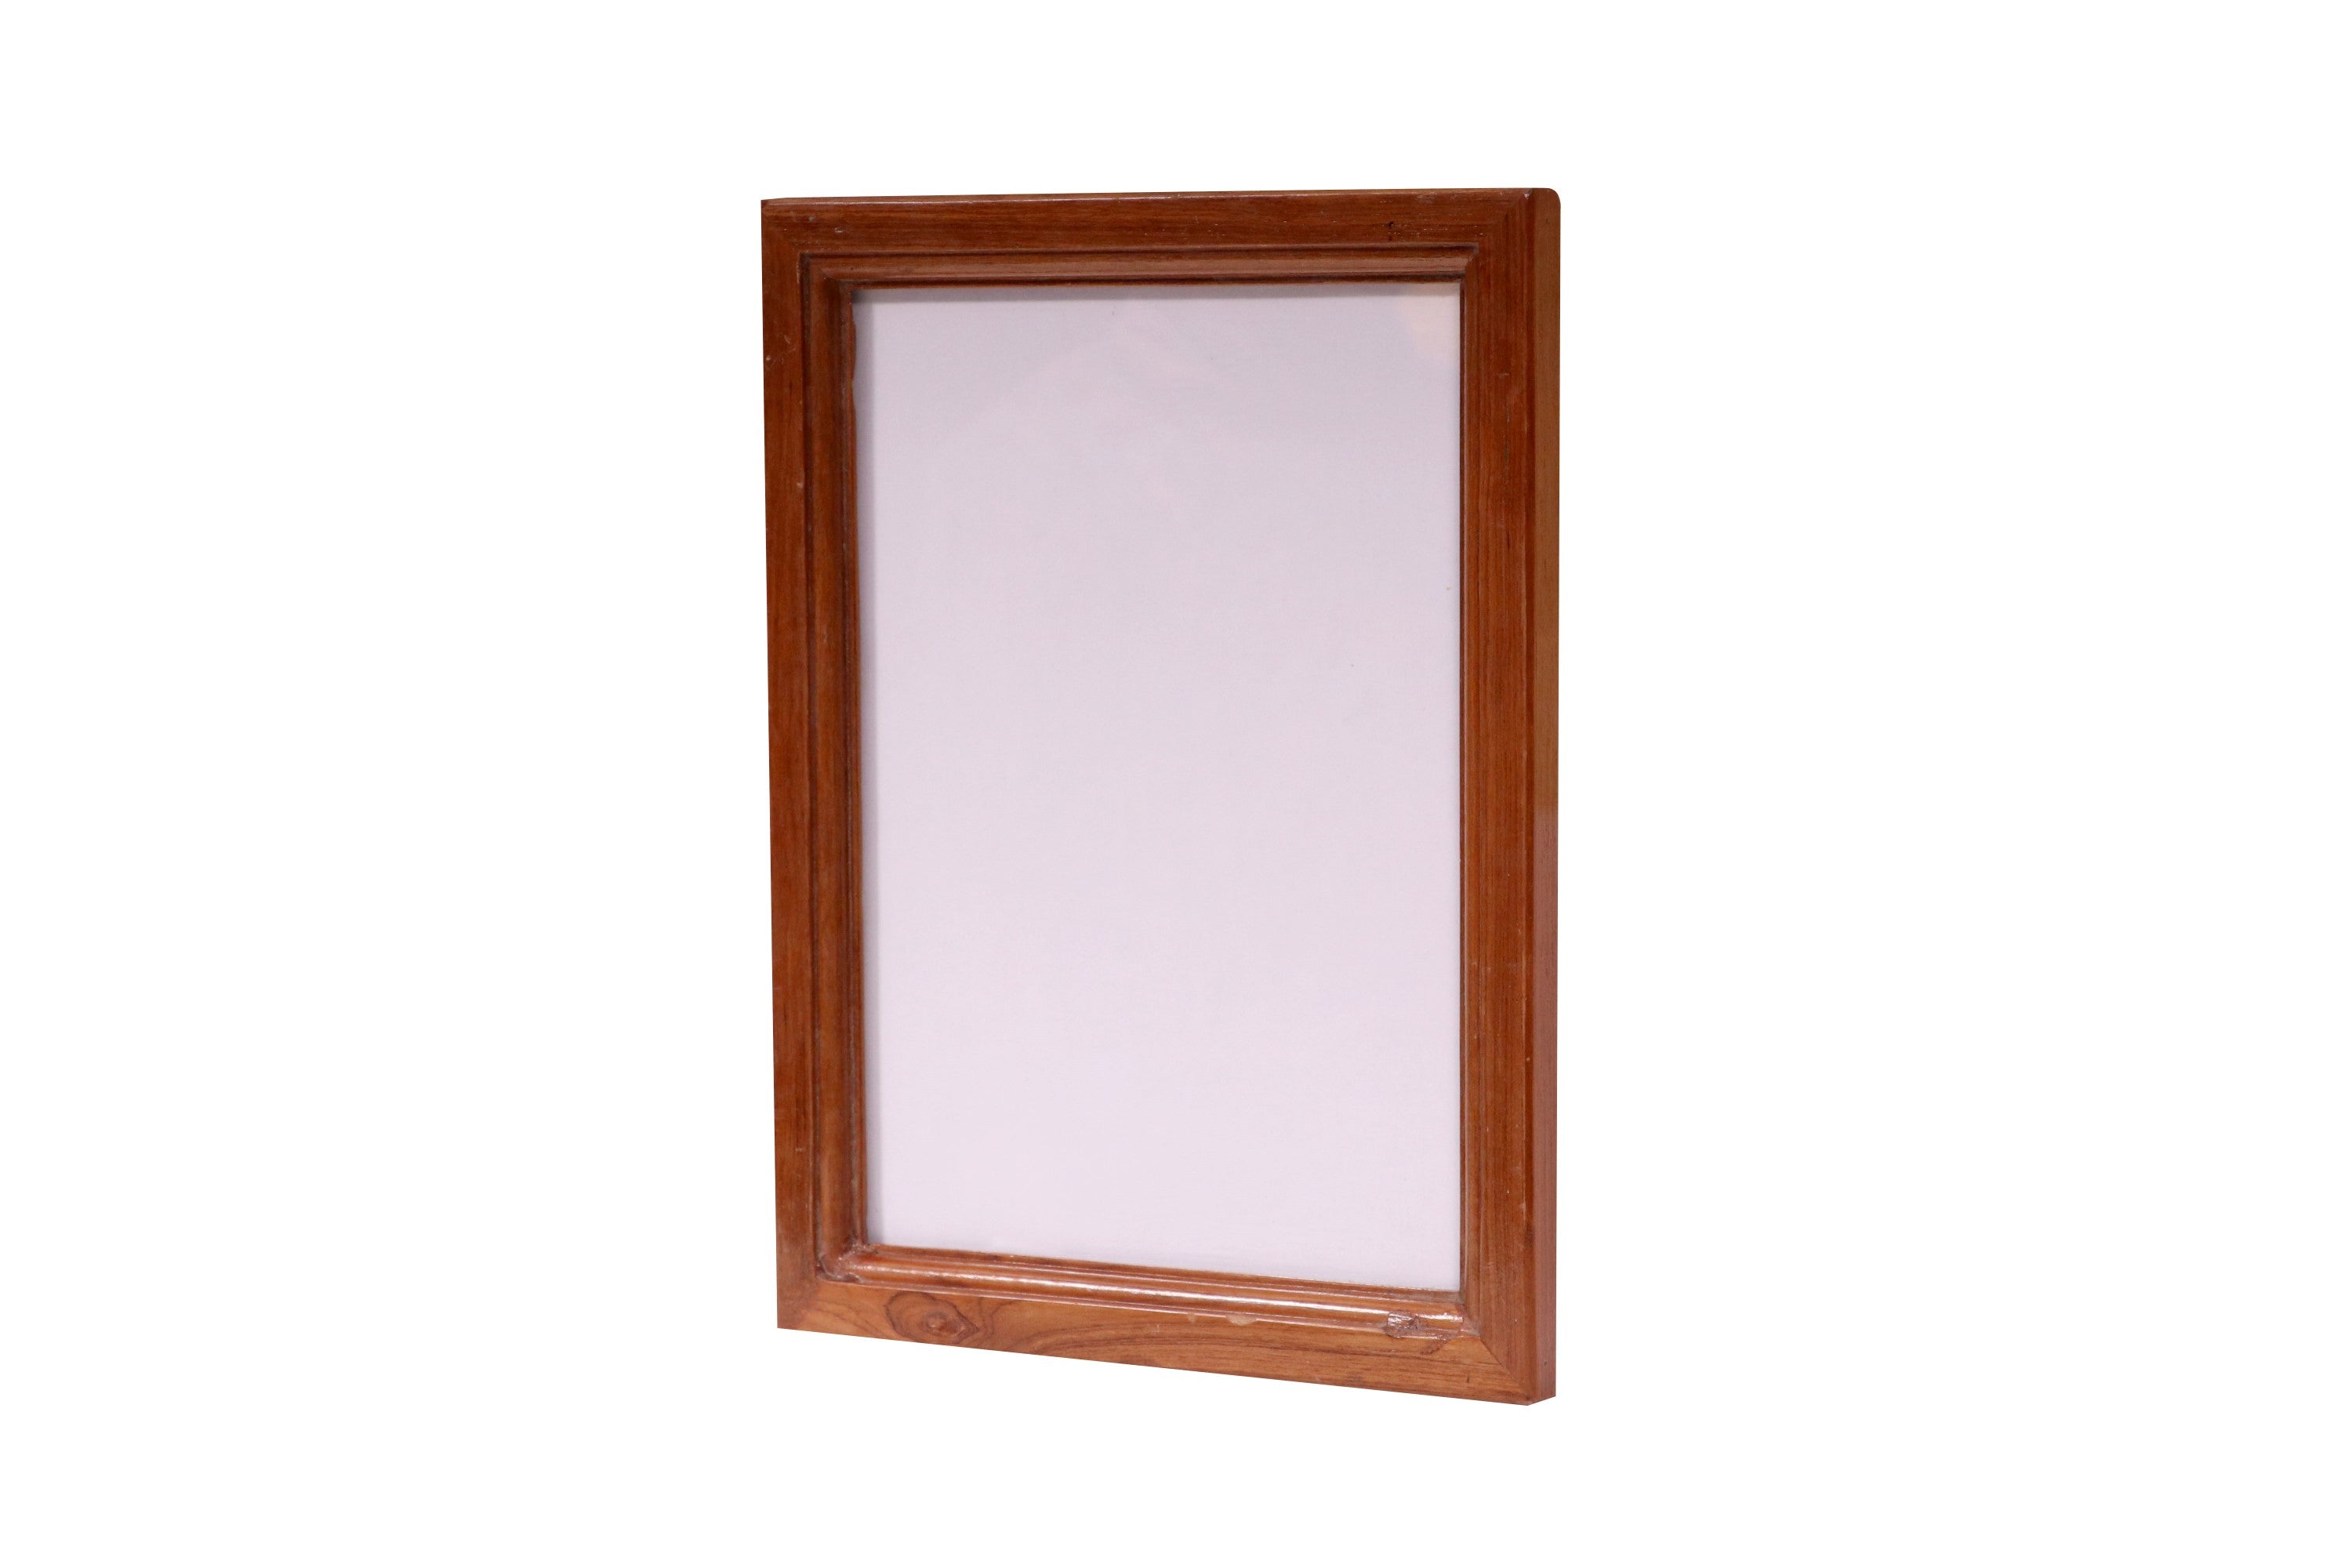 Teak wood frame A4 Concept Size Mirror Mirror